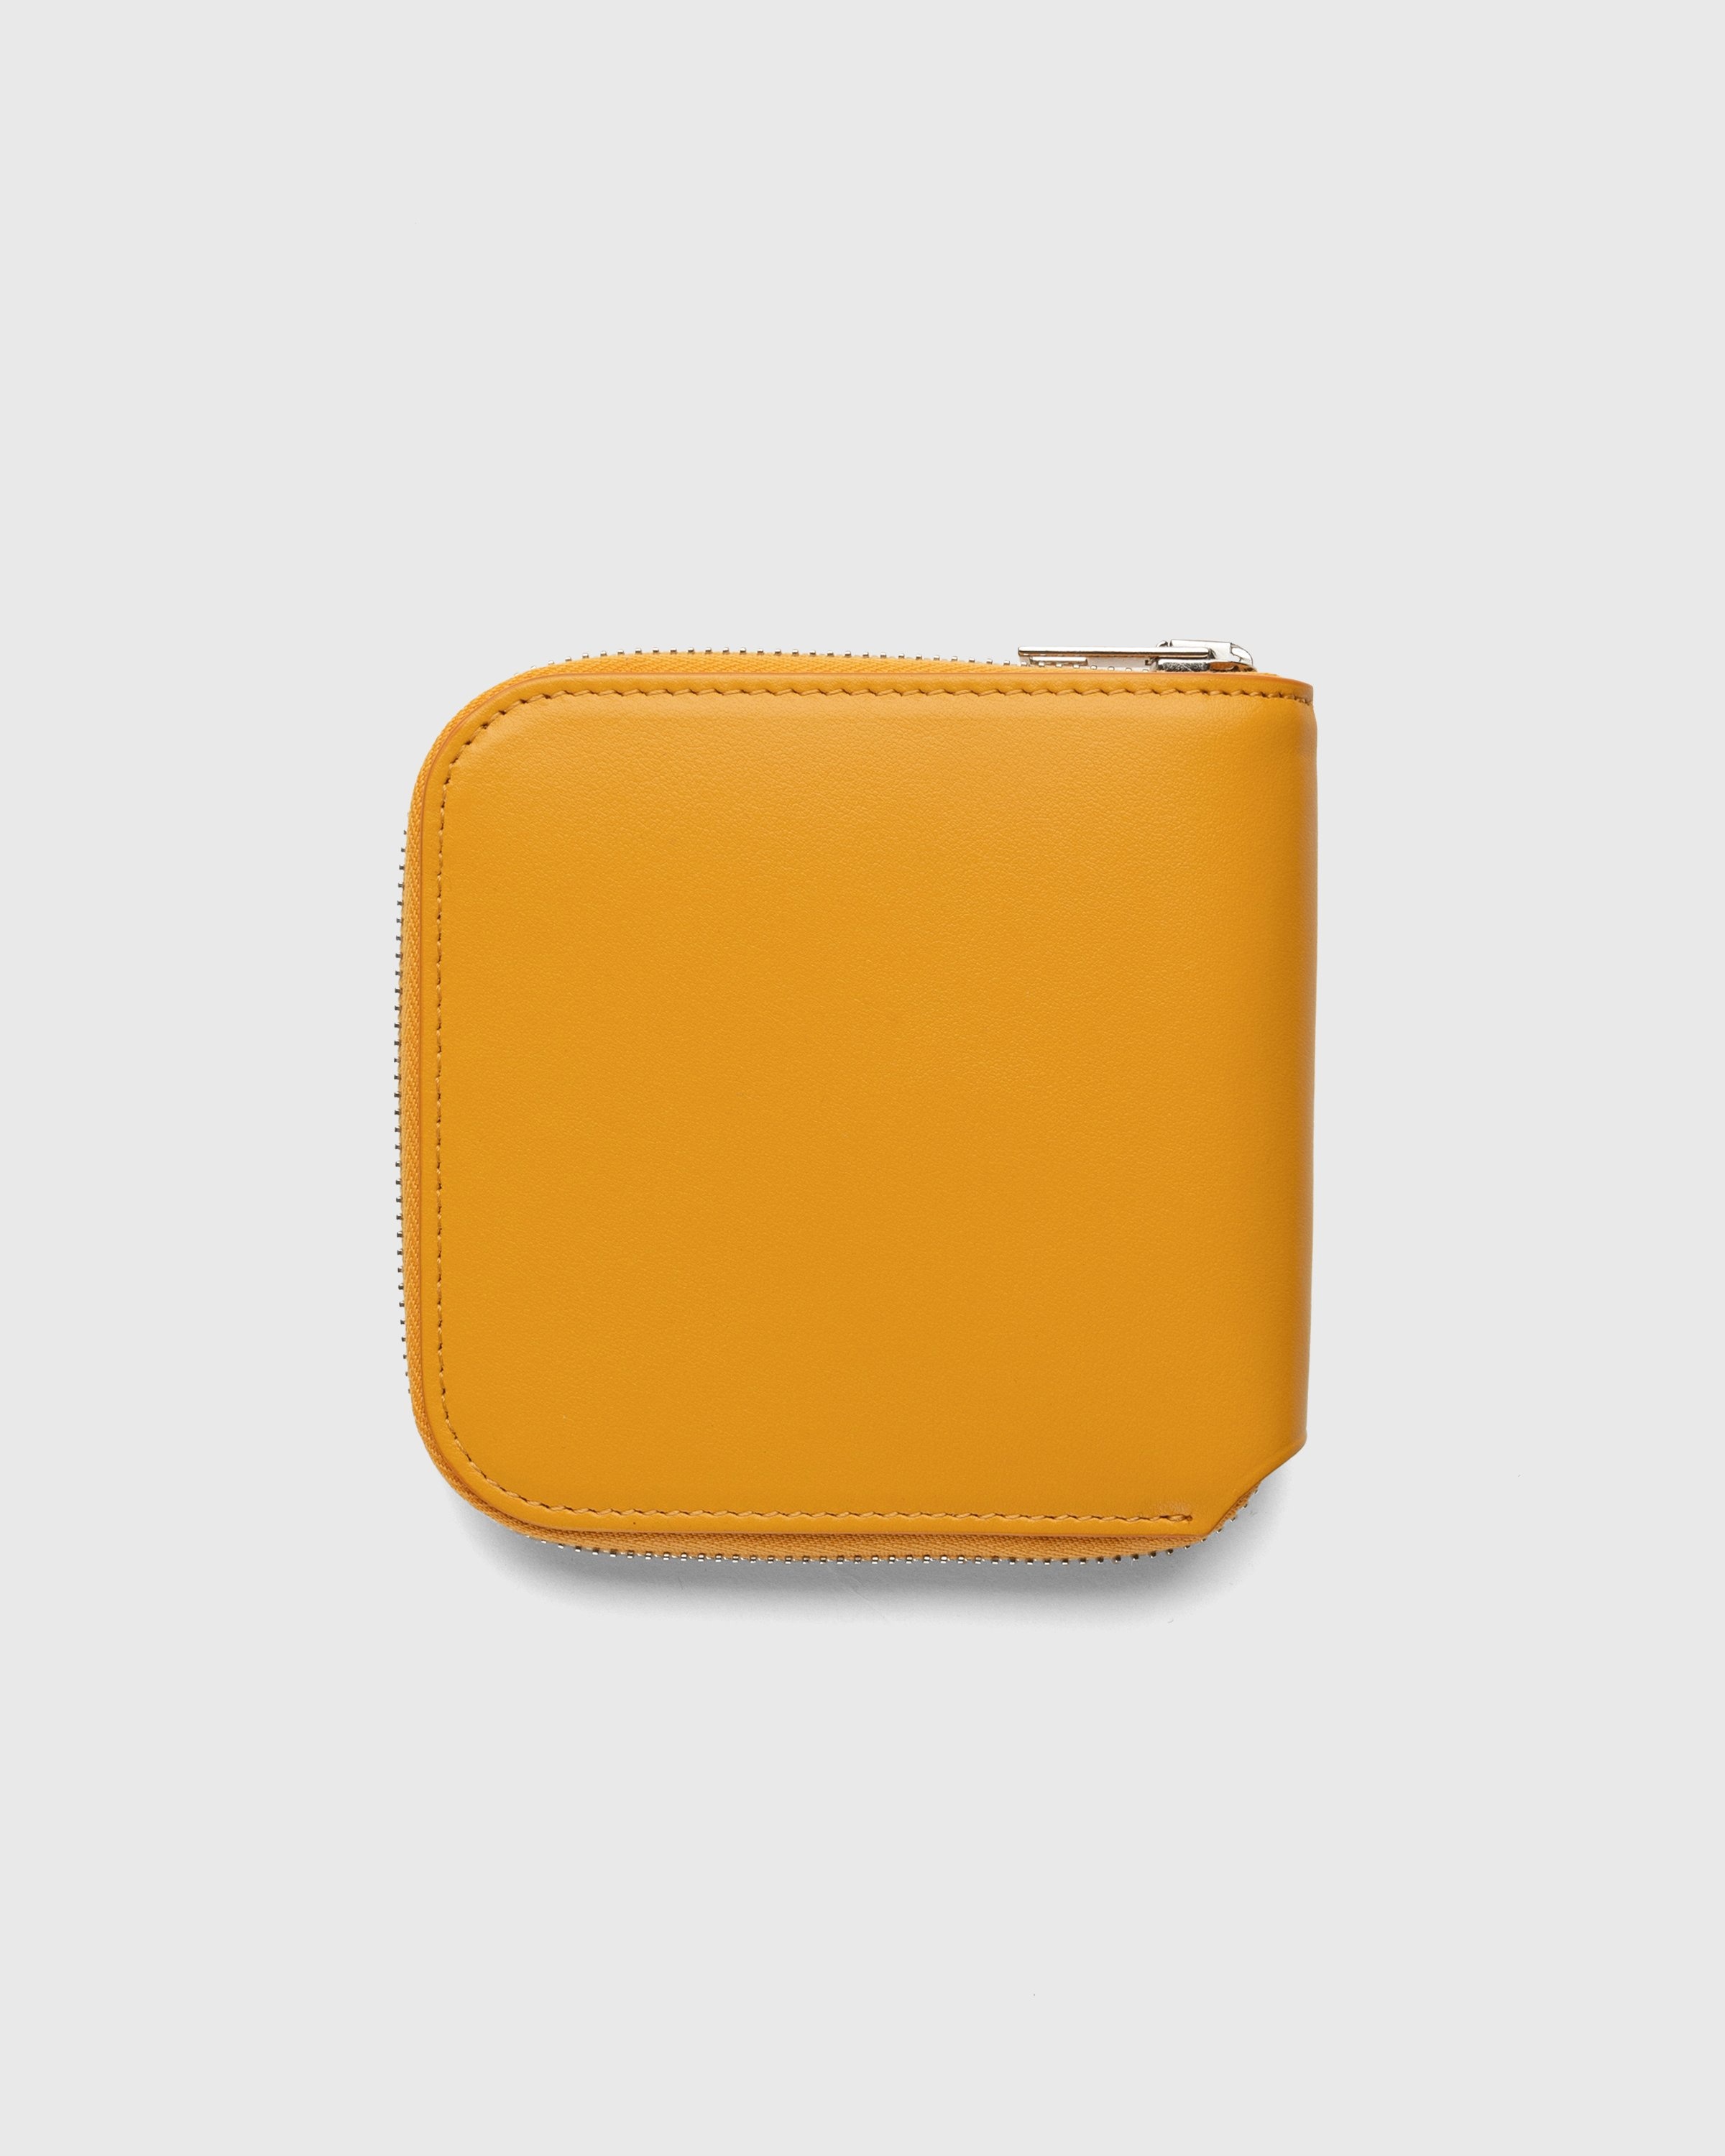 Acne Studios – Leather Zip Wallet Orange - Wallets - Orange - Image 2